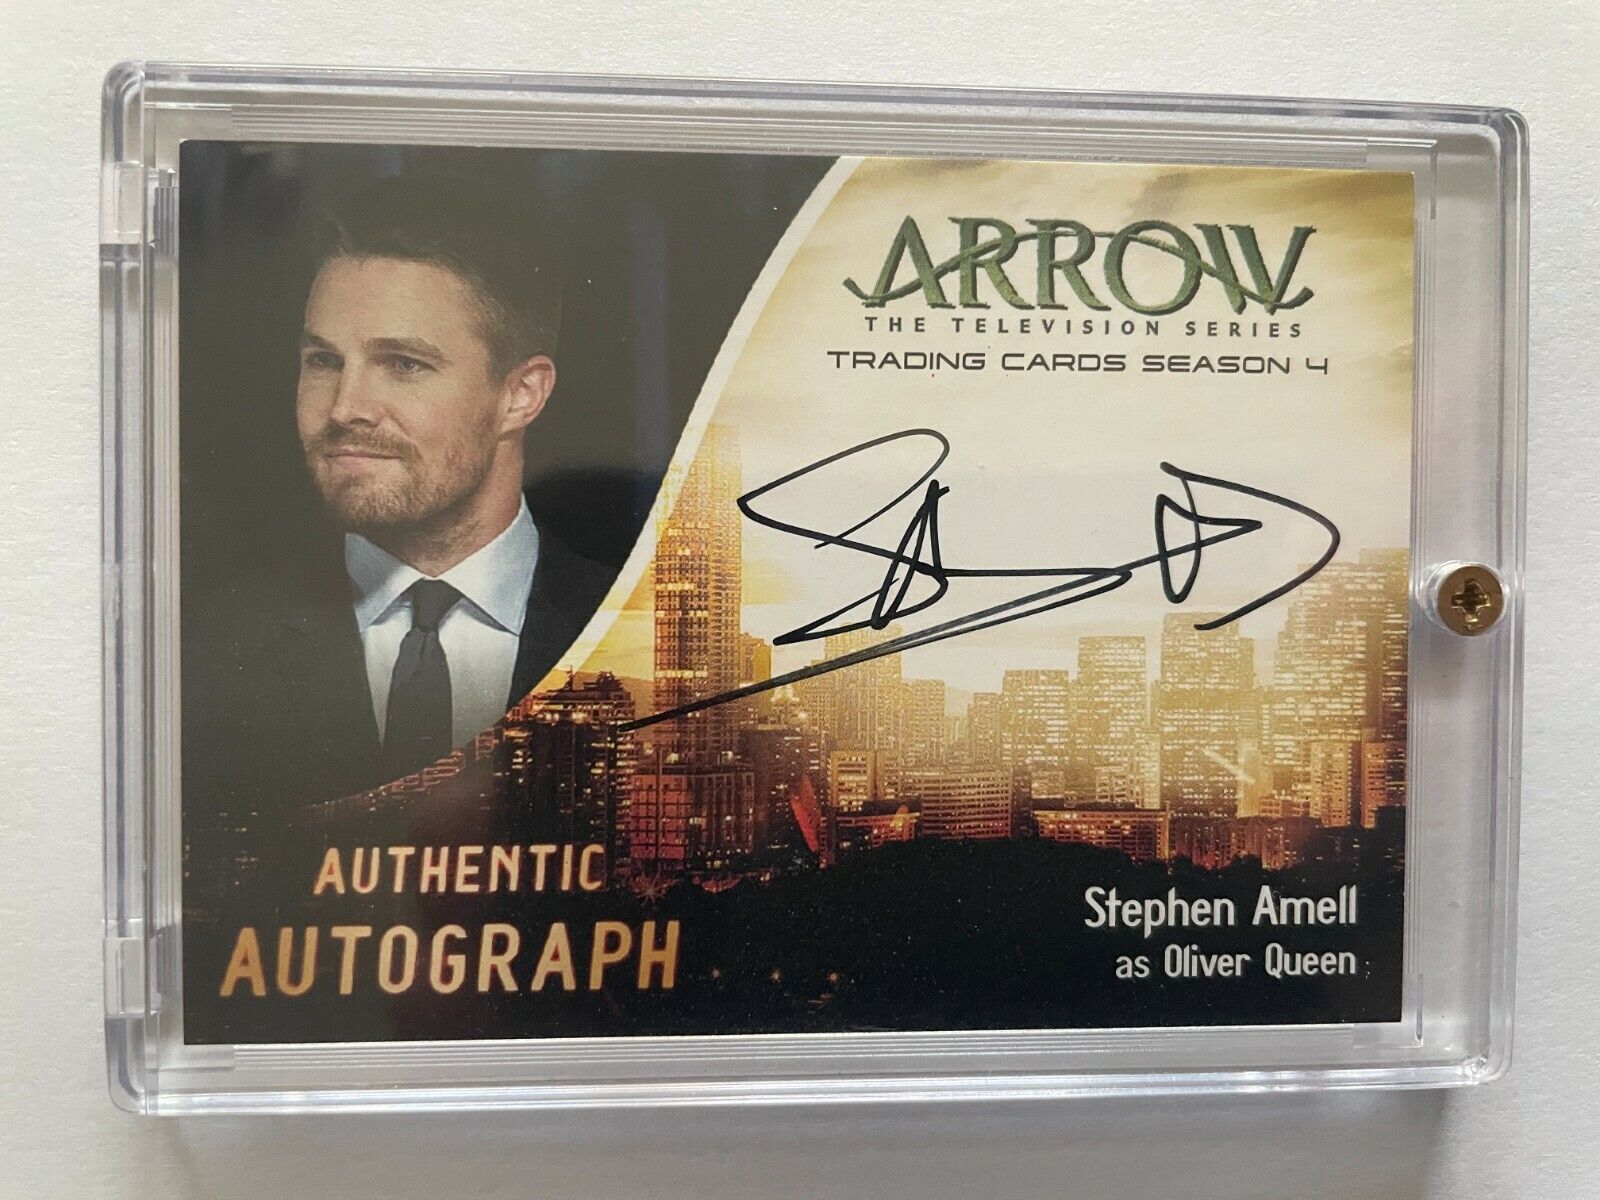 Arrow Season 4 Autograph Card SA1 Stephen Amell as Oliver Queen